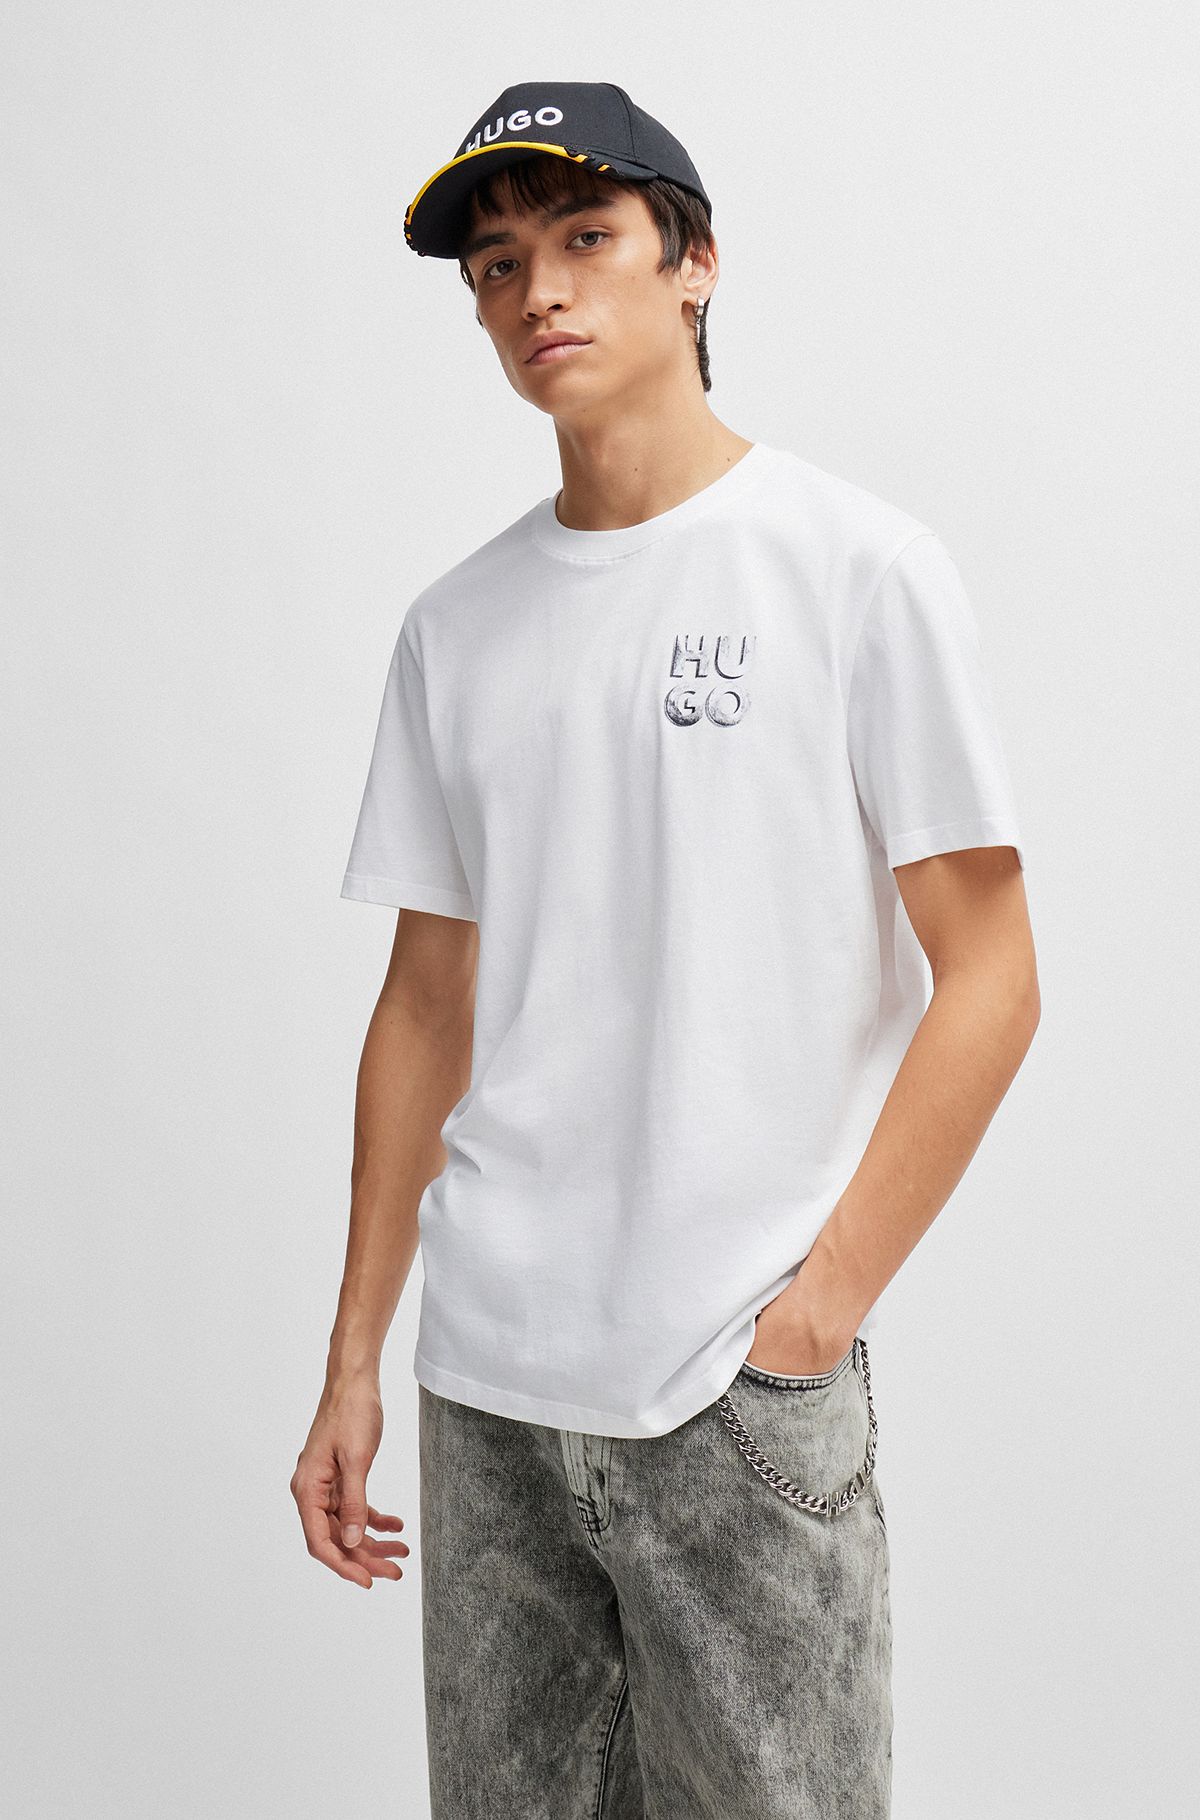 Camiseta de punto de algodón con logo reflectante decorativo, Blanco